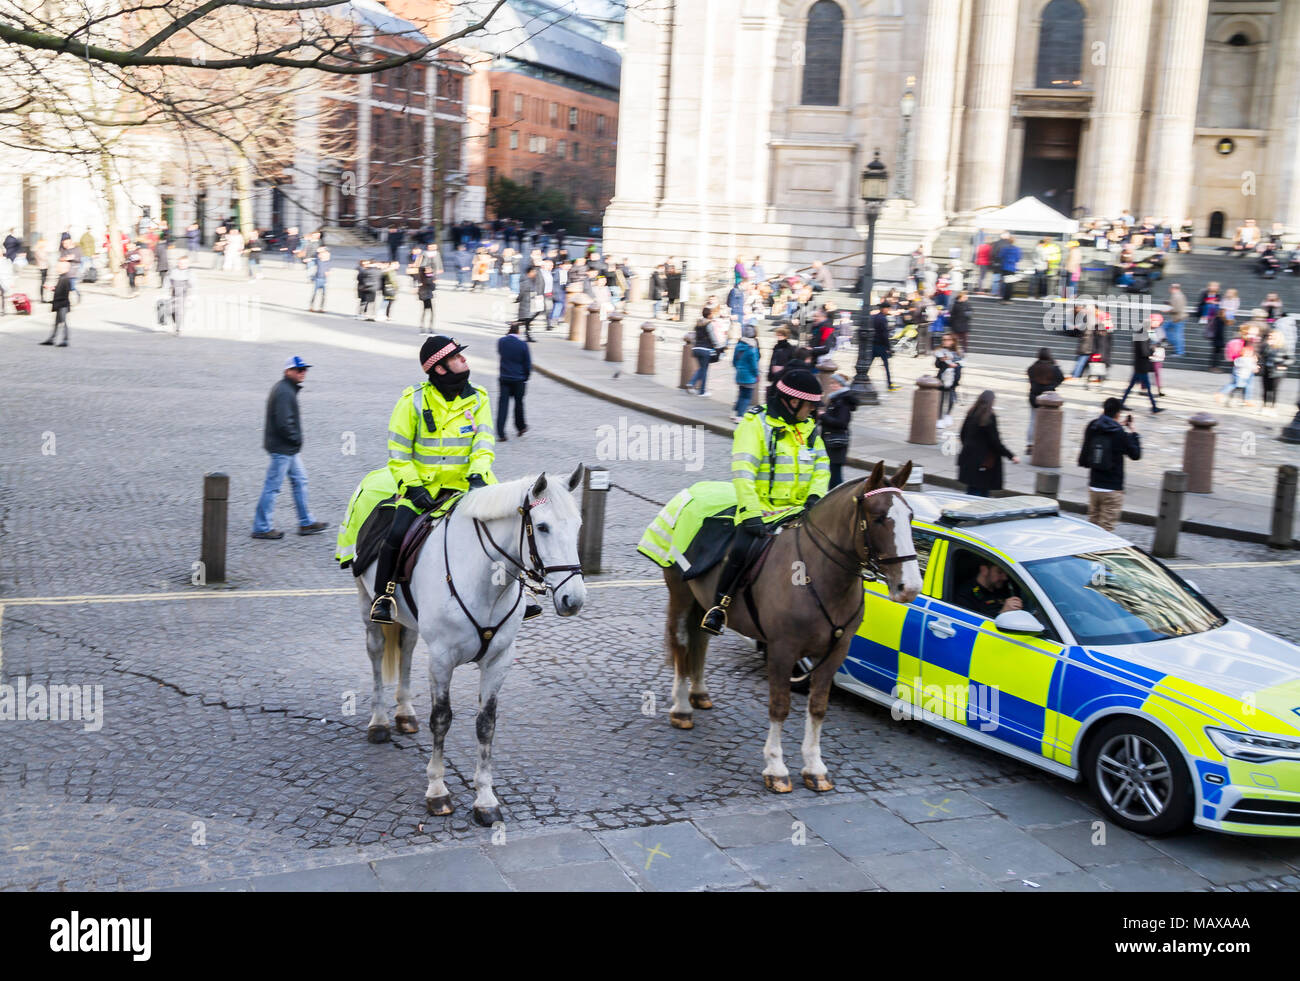 English Police, bobbys on Horseback, London, police UK, uk police old bill, britain british concept government authority peace keeping Stock Photo